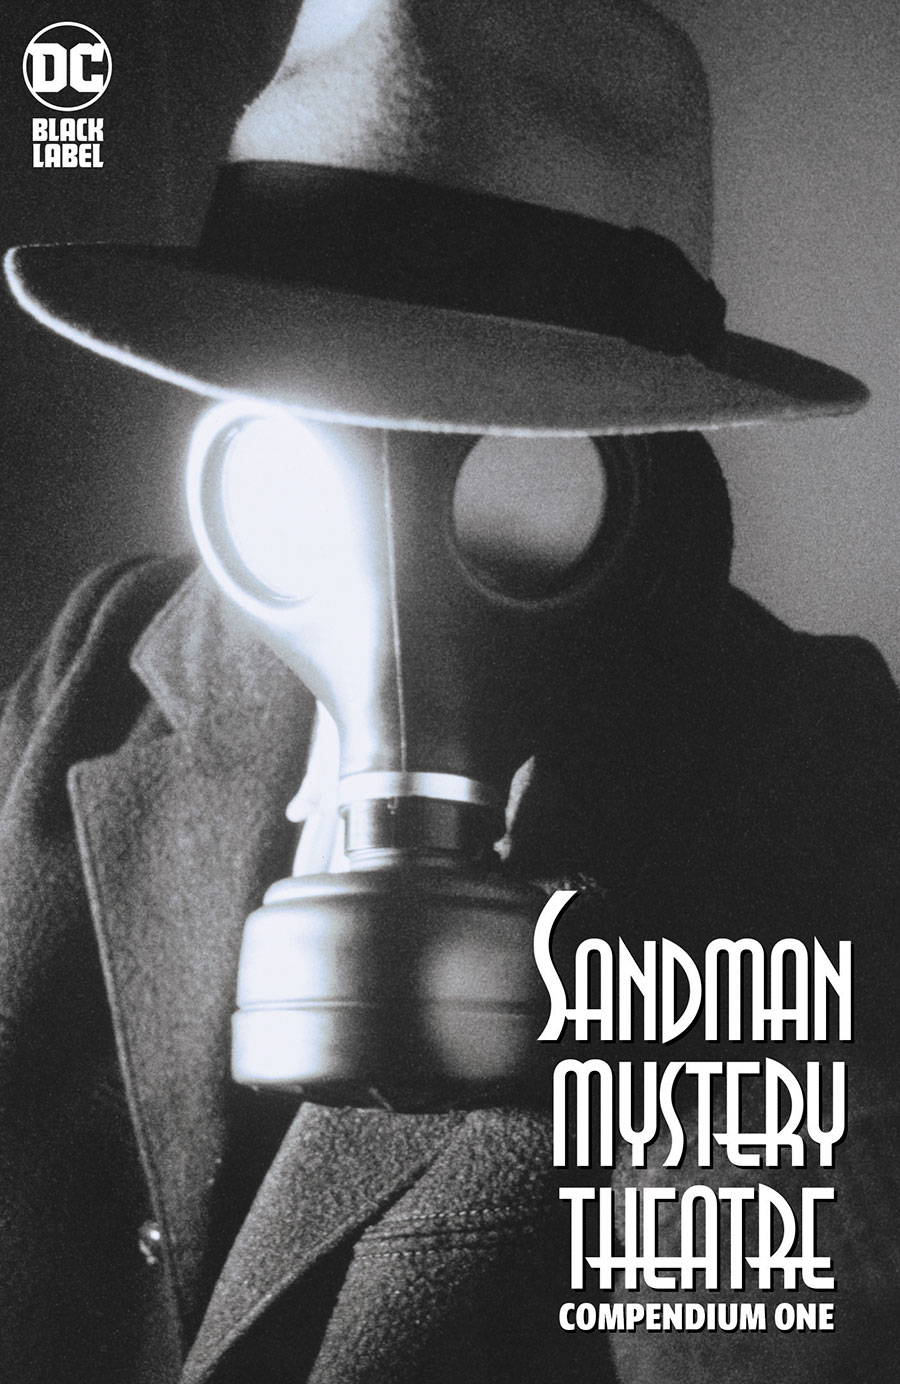 Sandman Mystery Theatre Compendium 1 TP